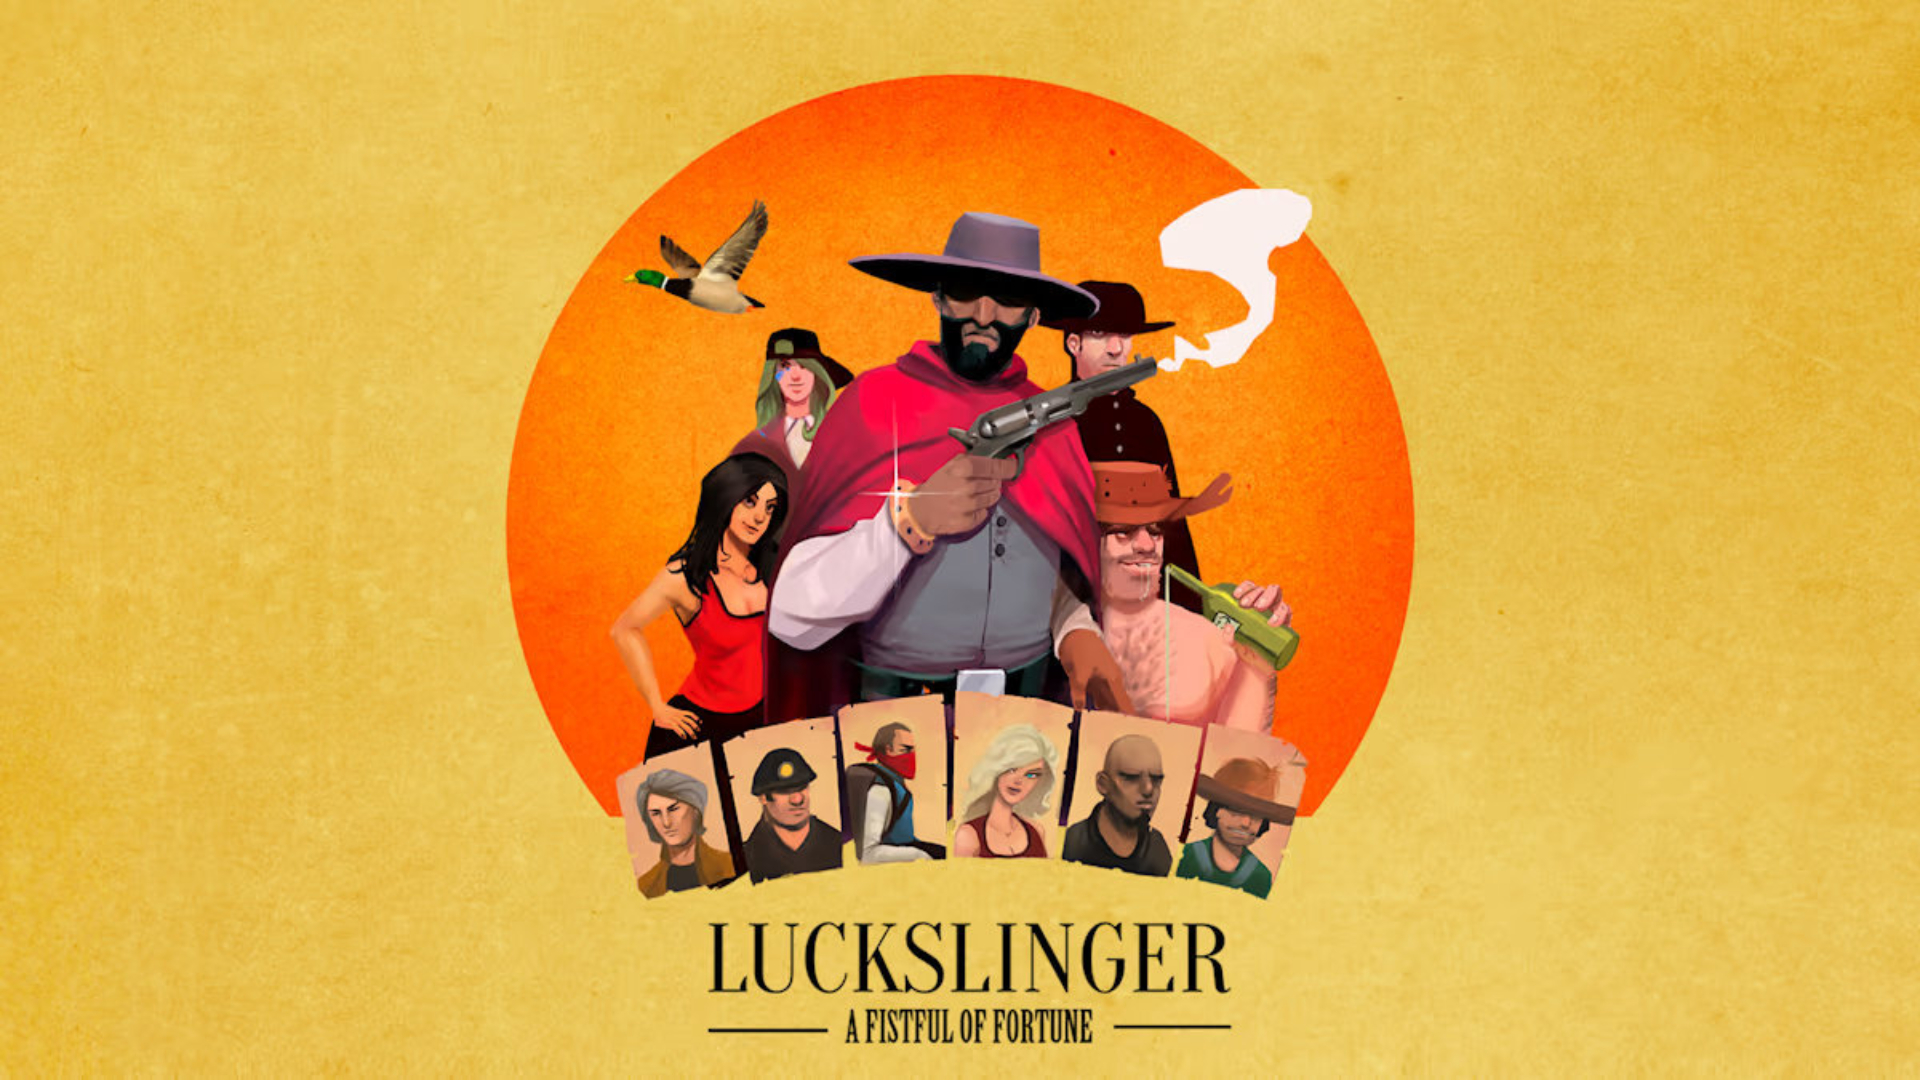 Cowboy games - Luckslinger